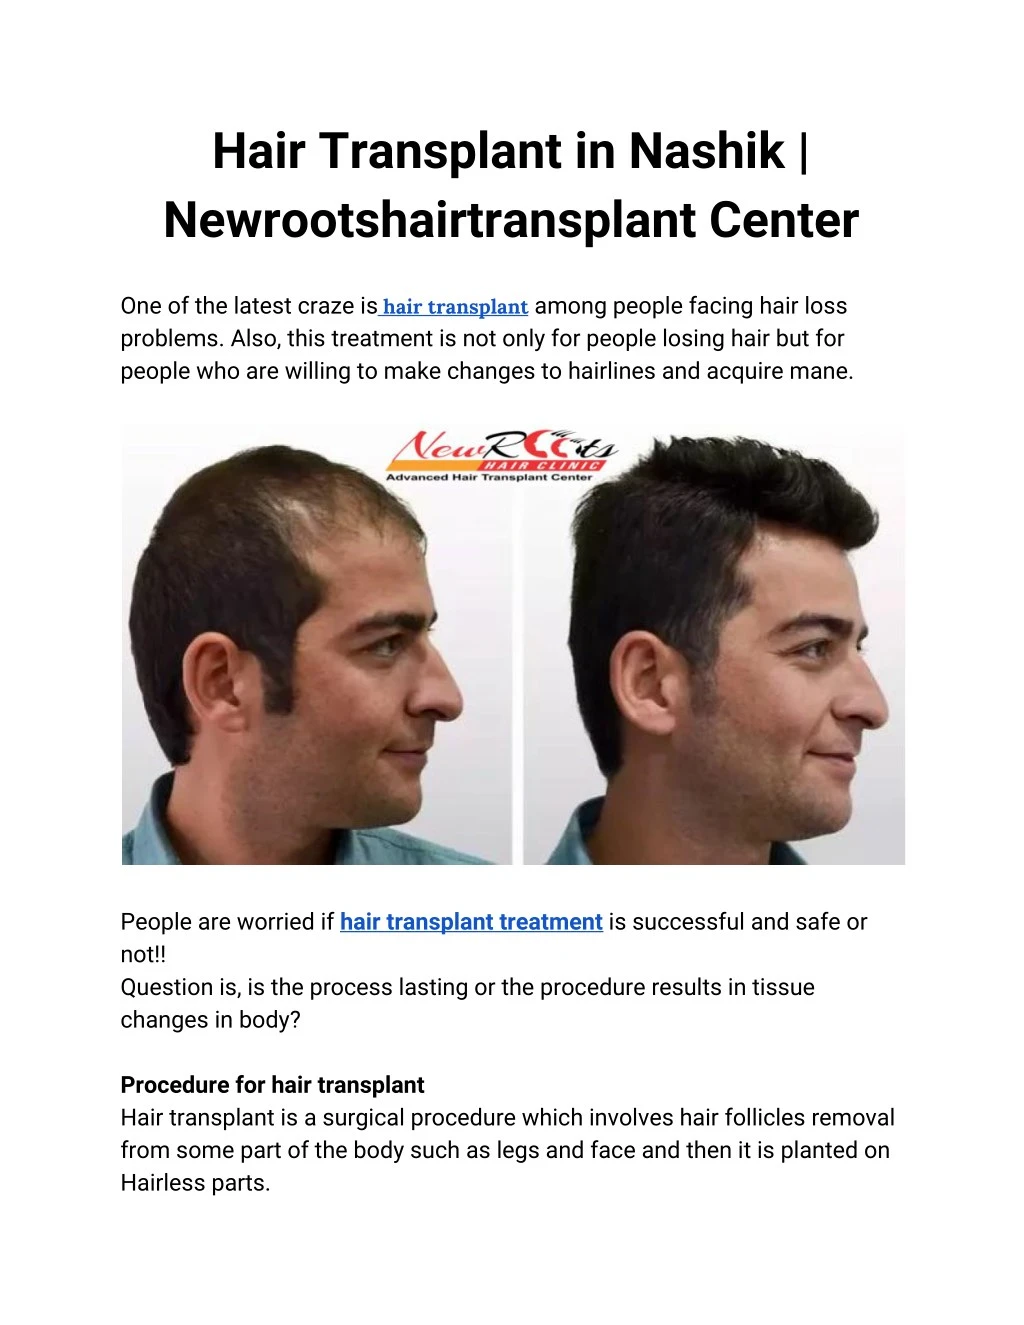 hair transplant in nashik newrootshairtransplant